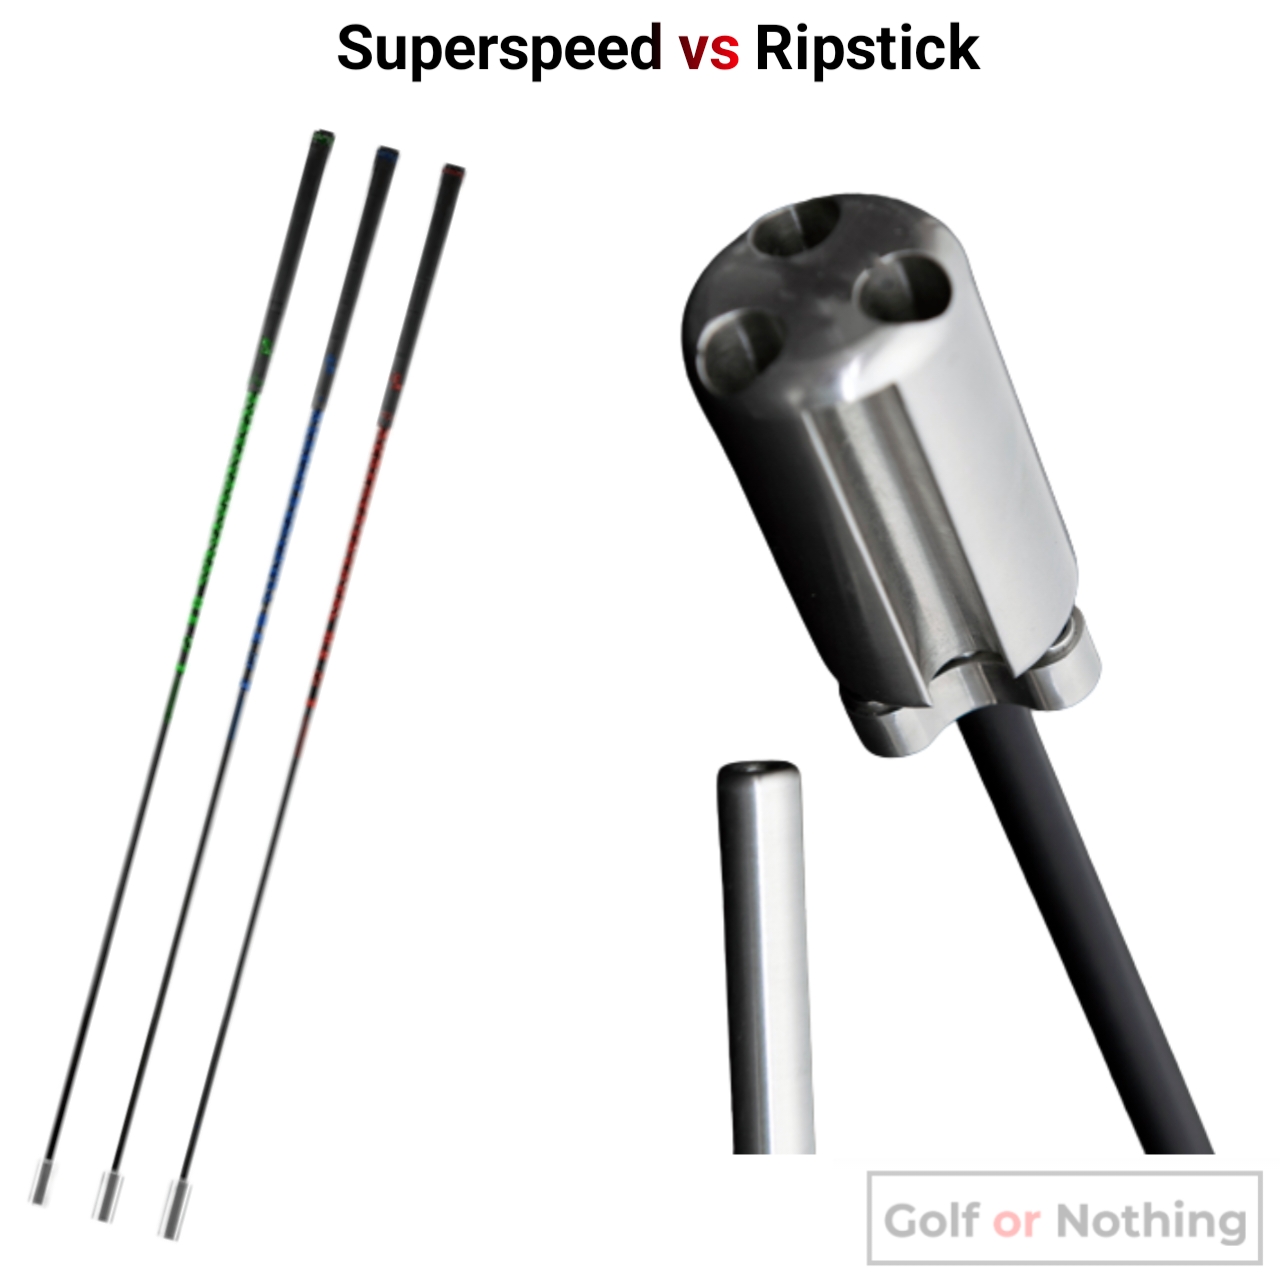 Rypstic vs Superspeed image